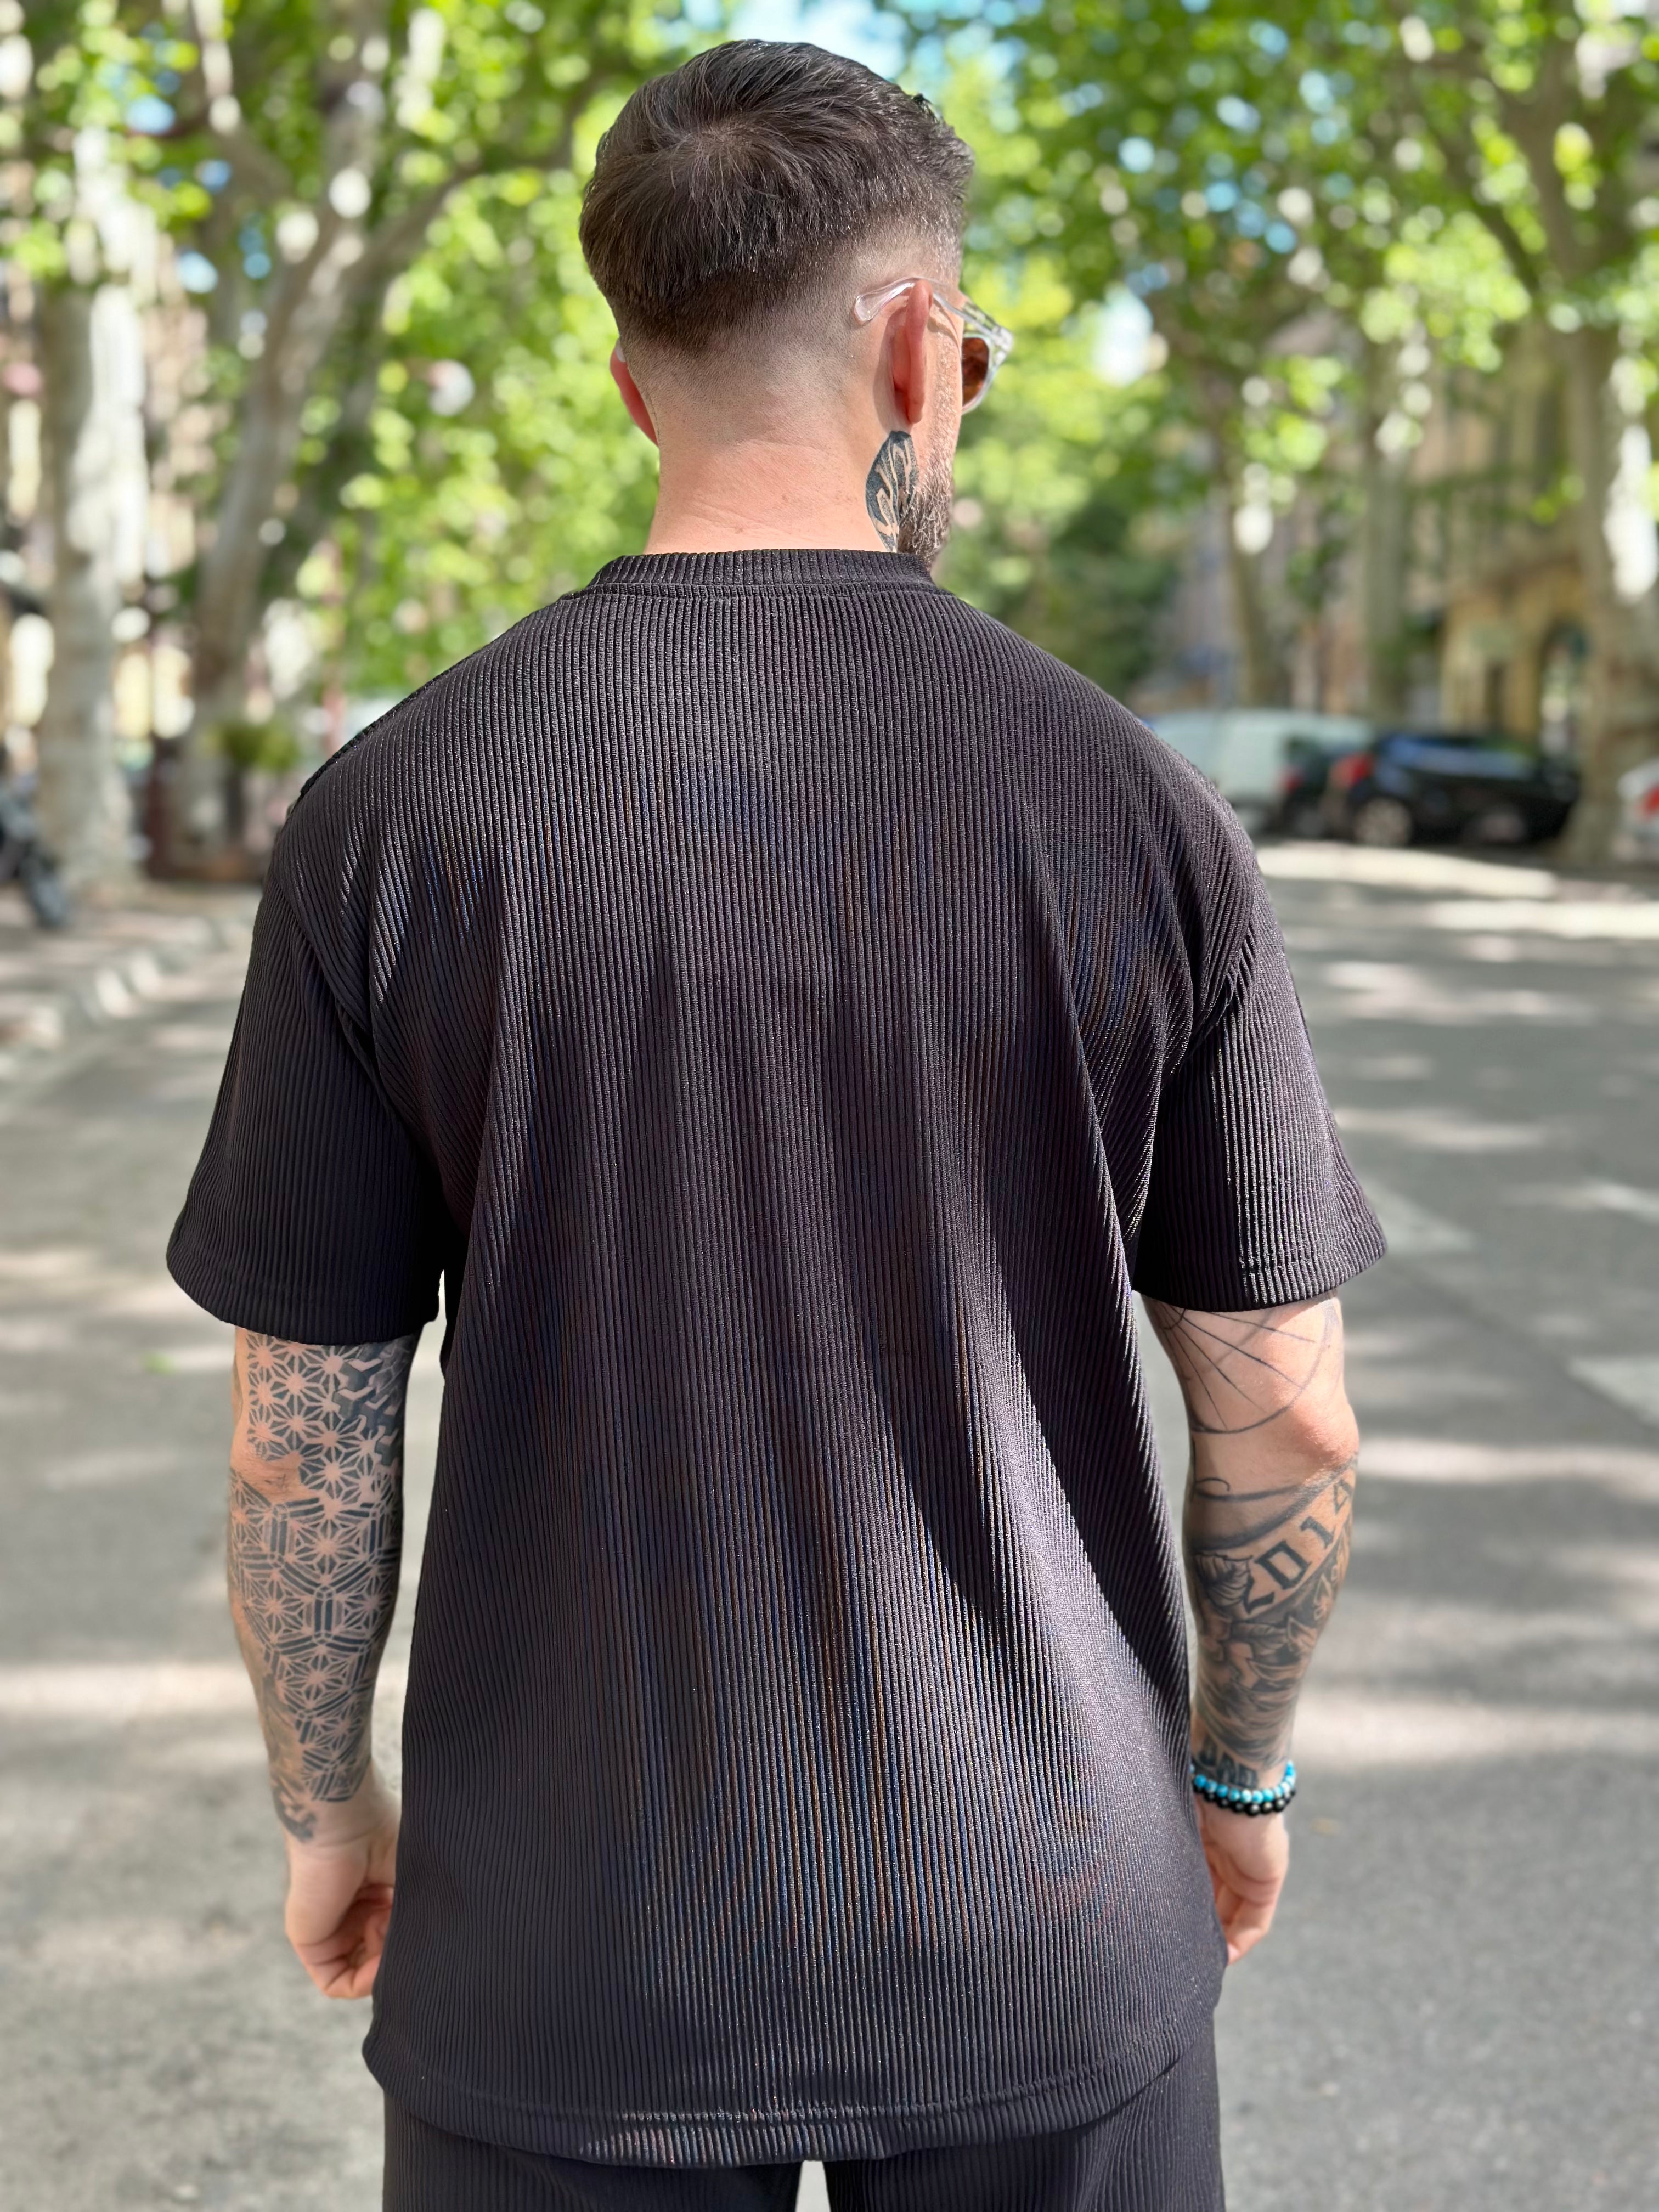 ADJ - Ensemble Paolo noir short + T-shirt oversize